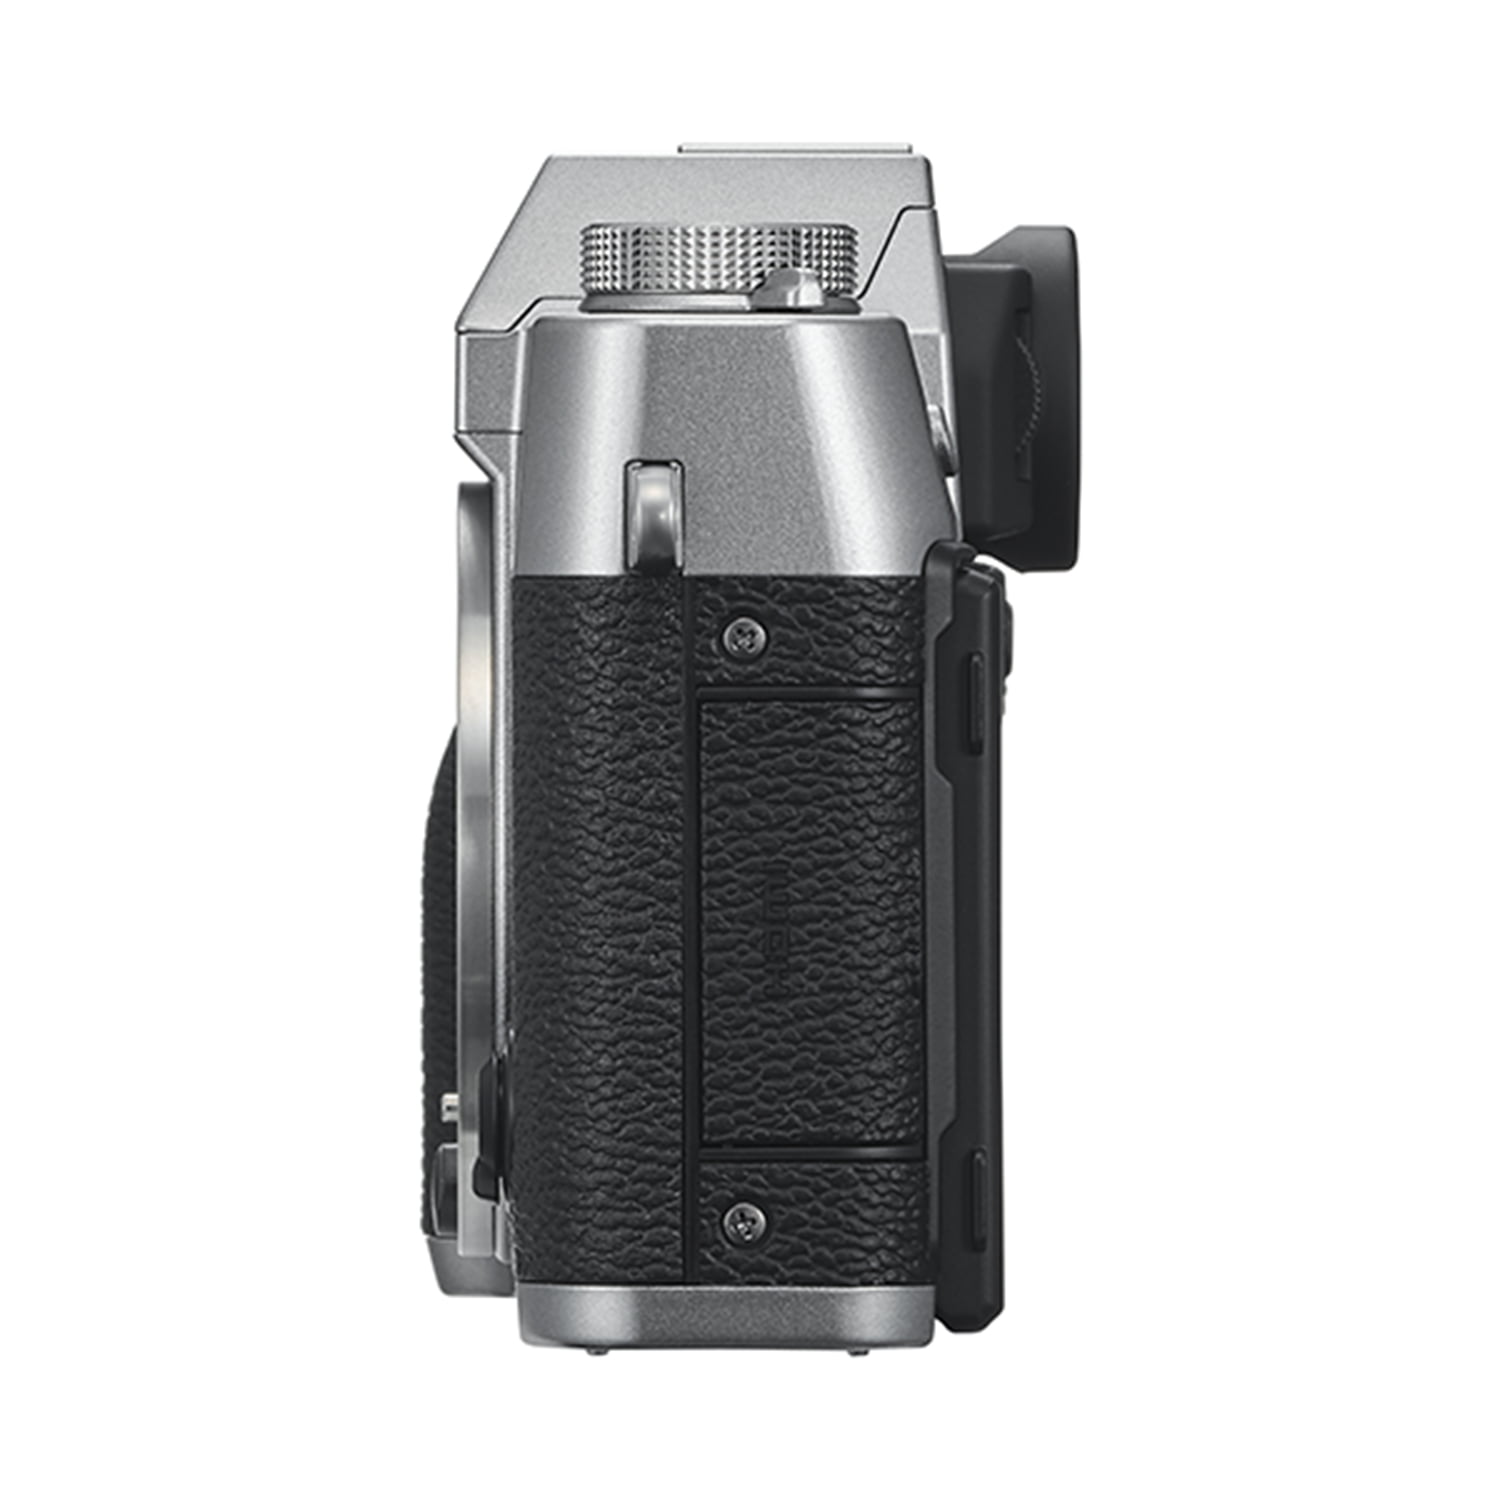 Fujifilm X-T30 Mirrorless Digital Camera (Body Only - Silver 